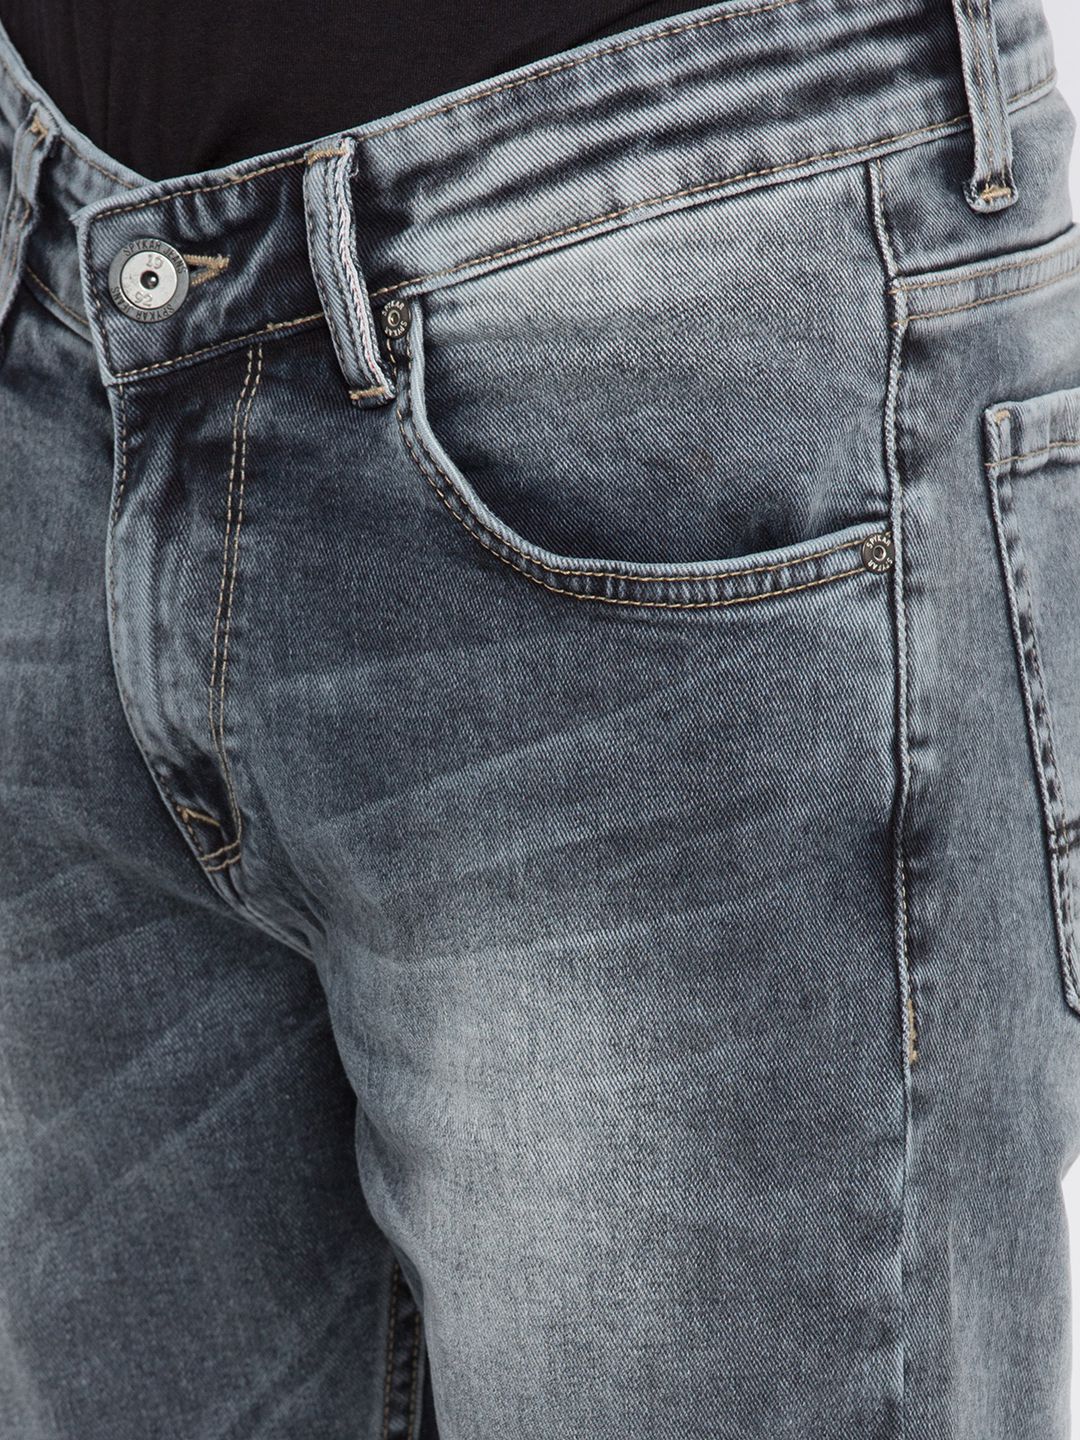 spykar grey jeans